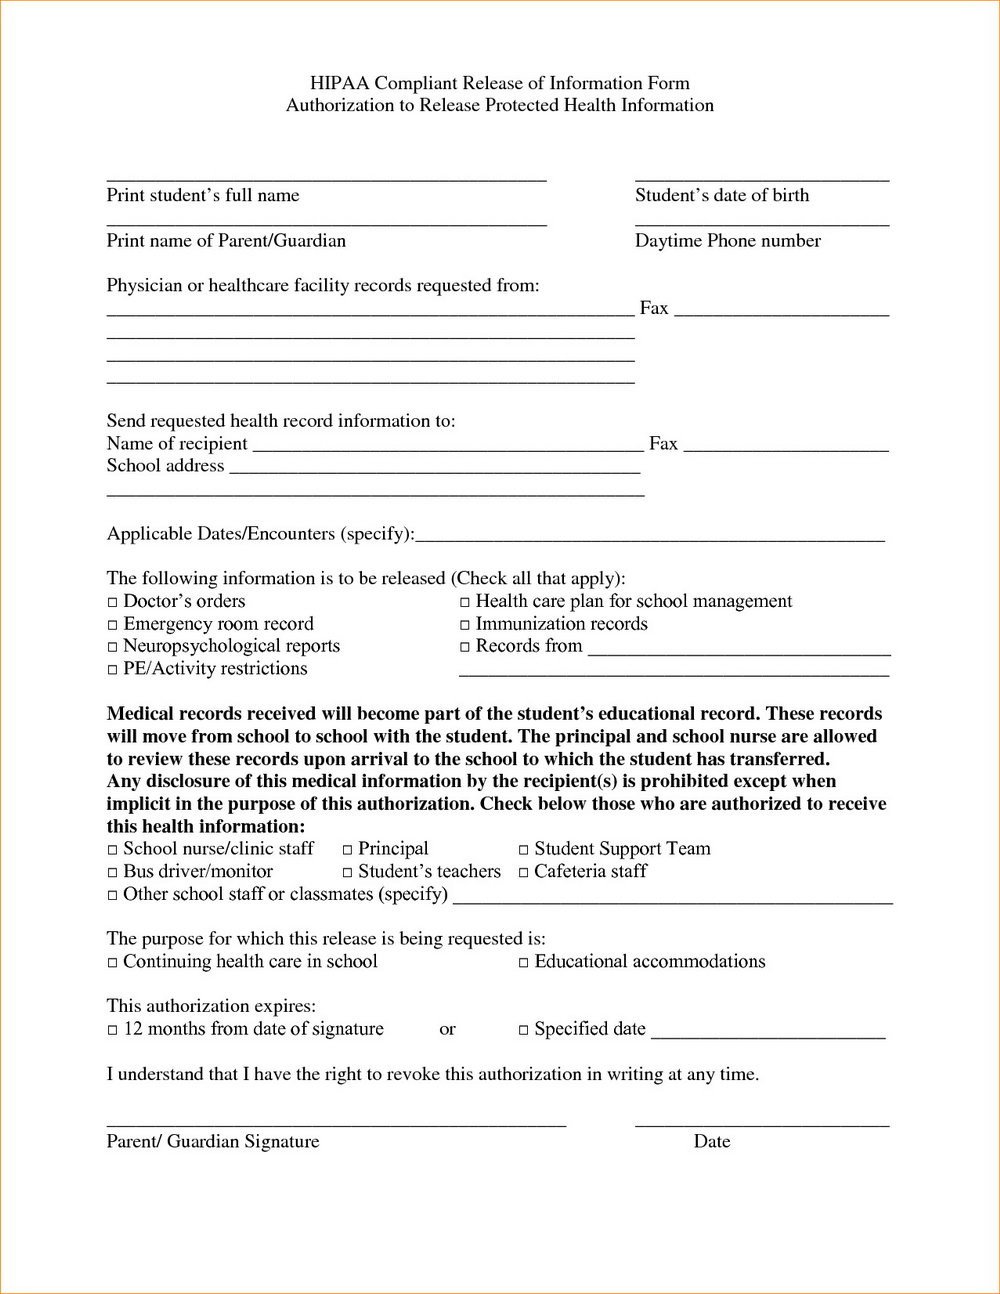 Hipaa Compliance forms for Employers Hipaa Pliance forms for Employers forms 5357